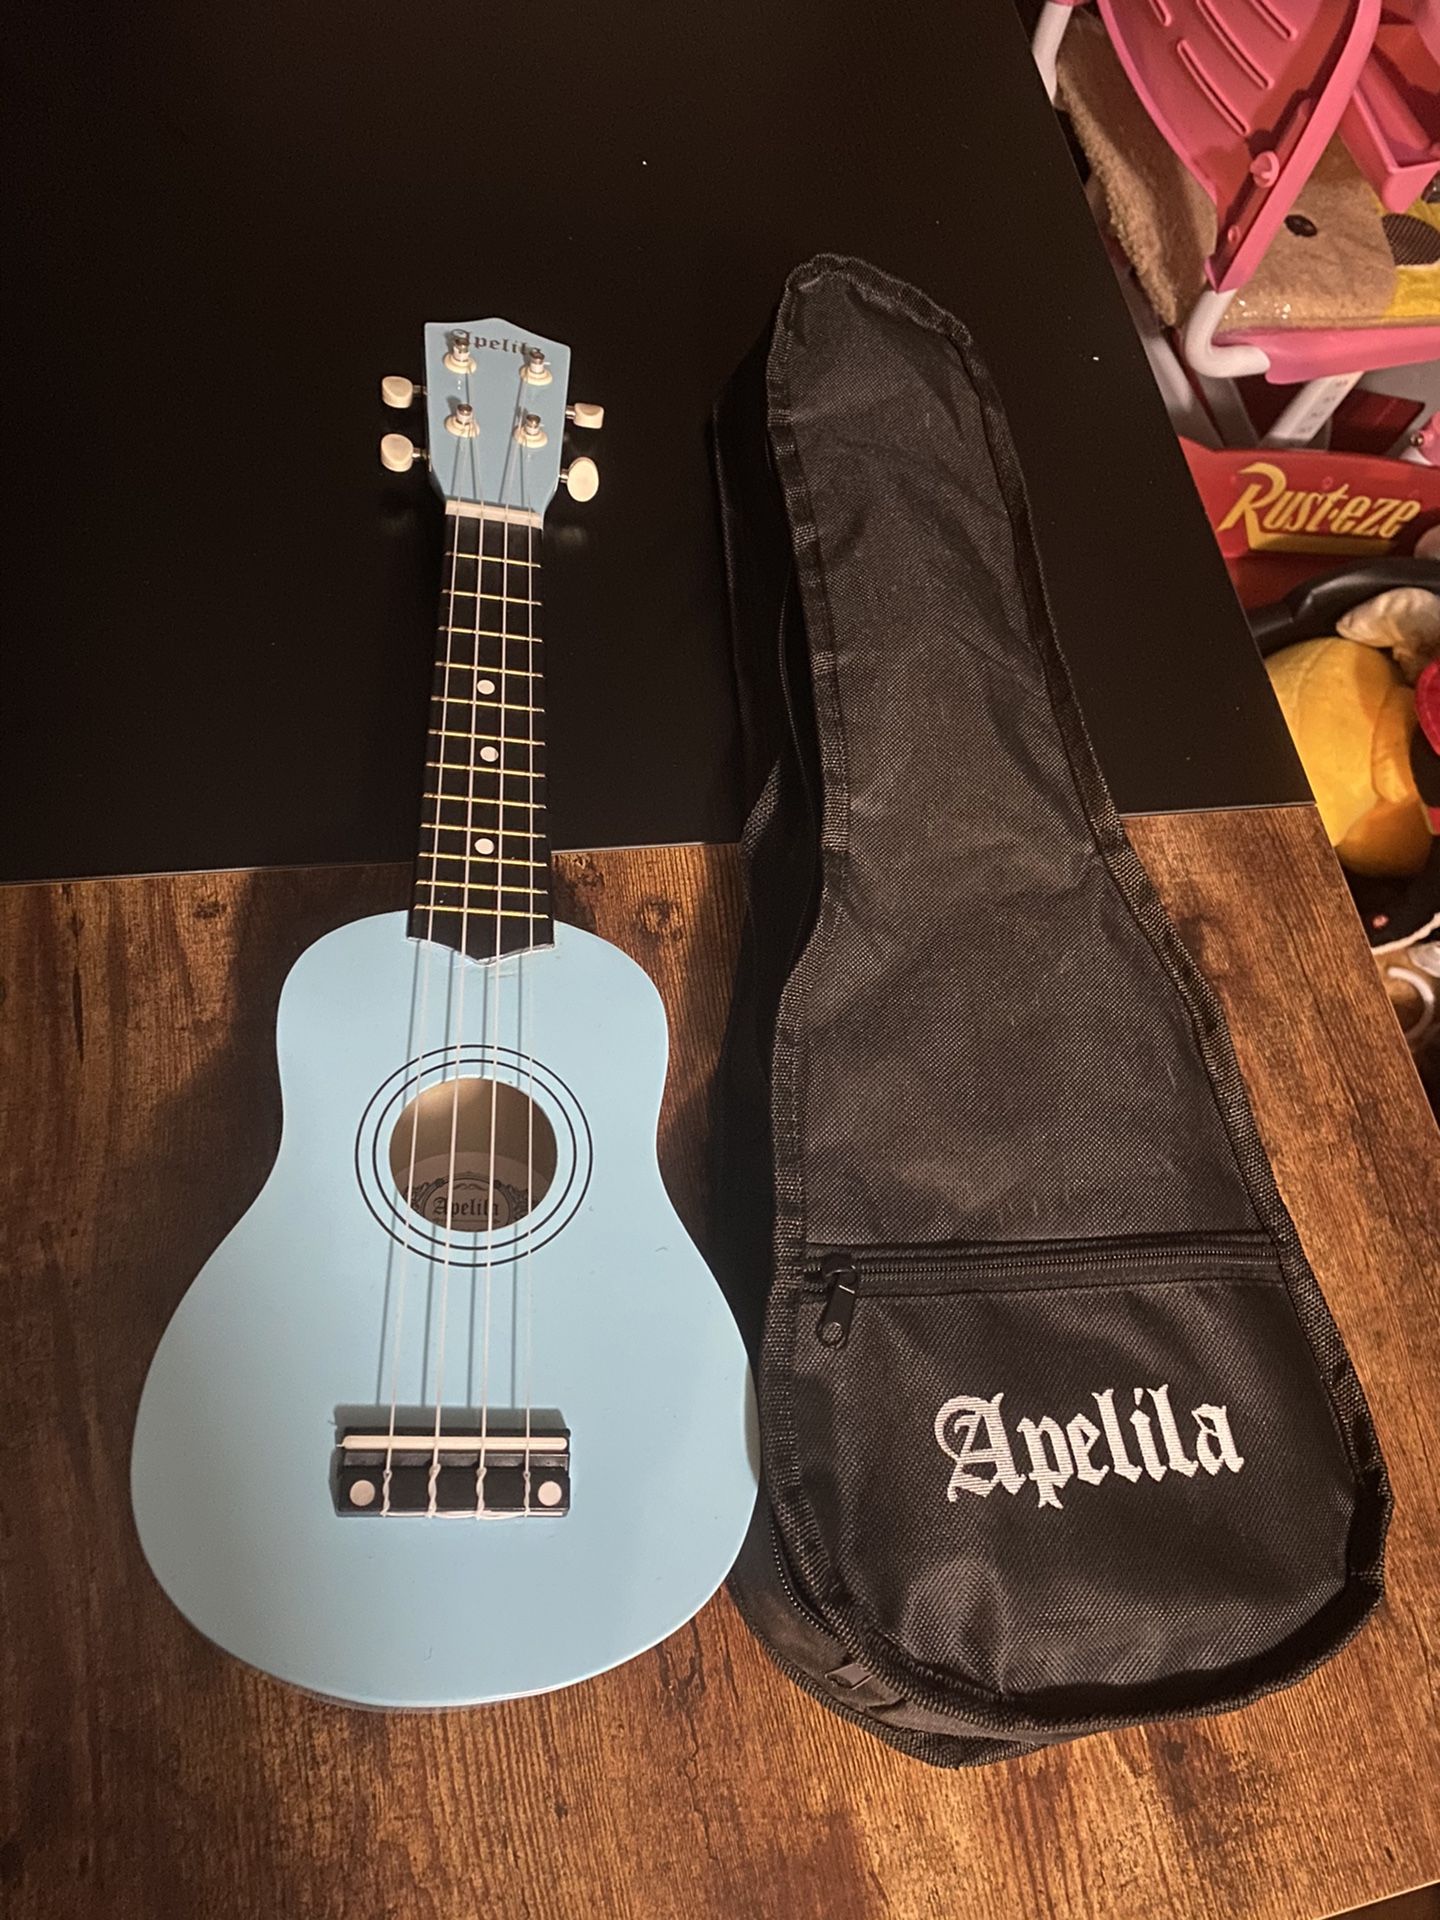 Guitarra Apelila